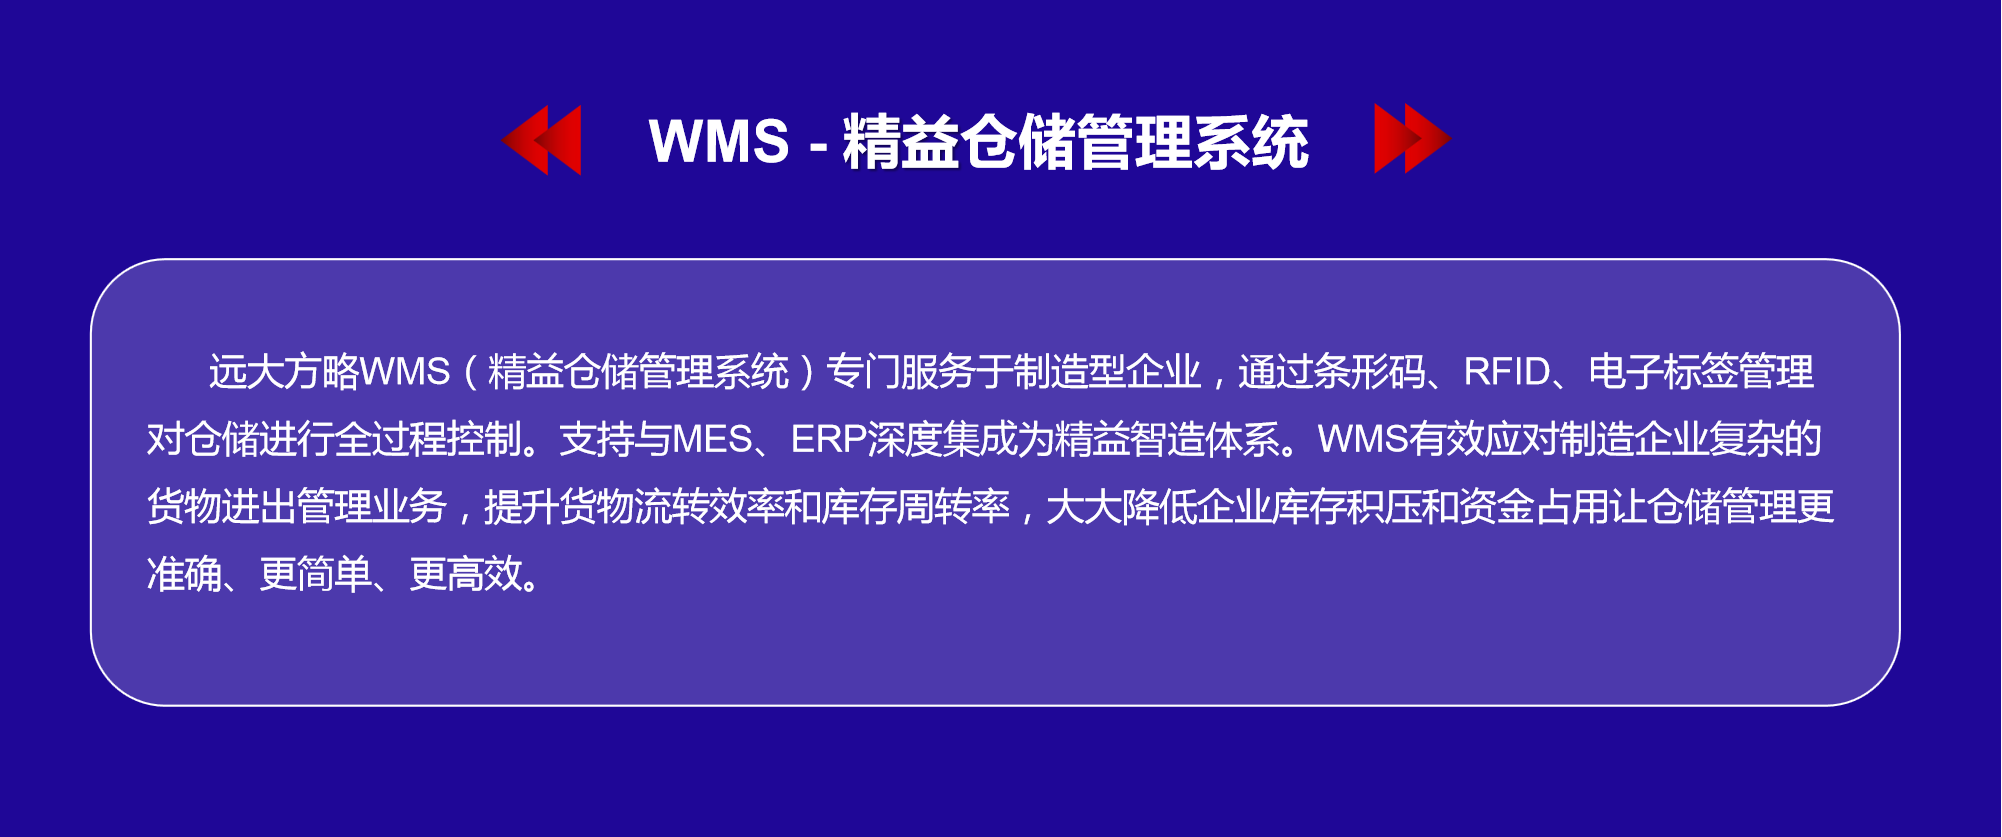 WMS产品介绍